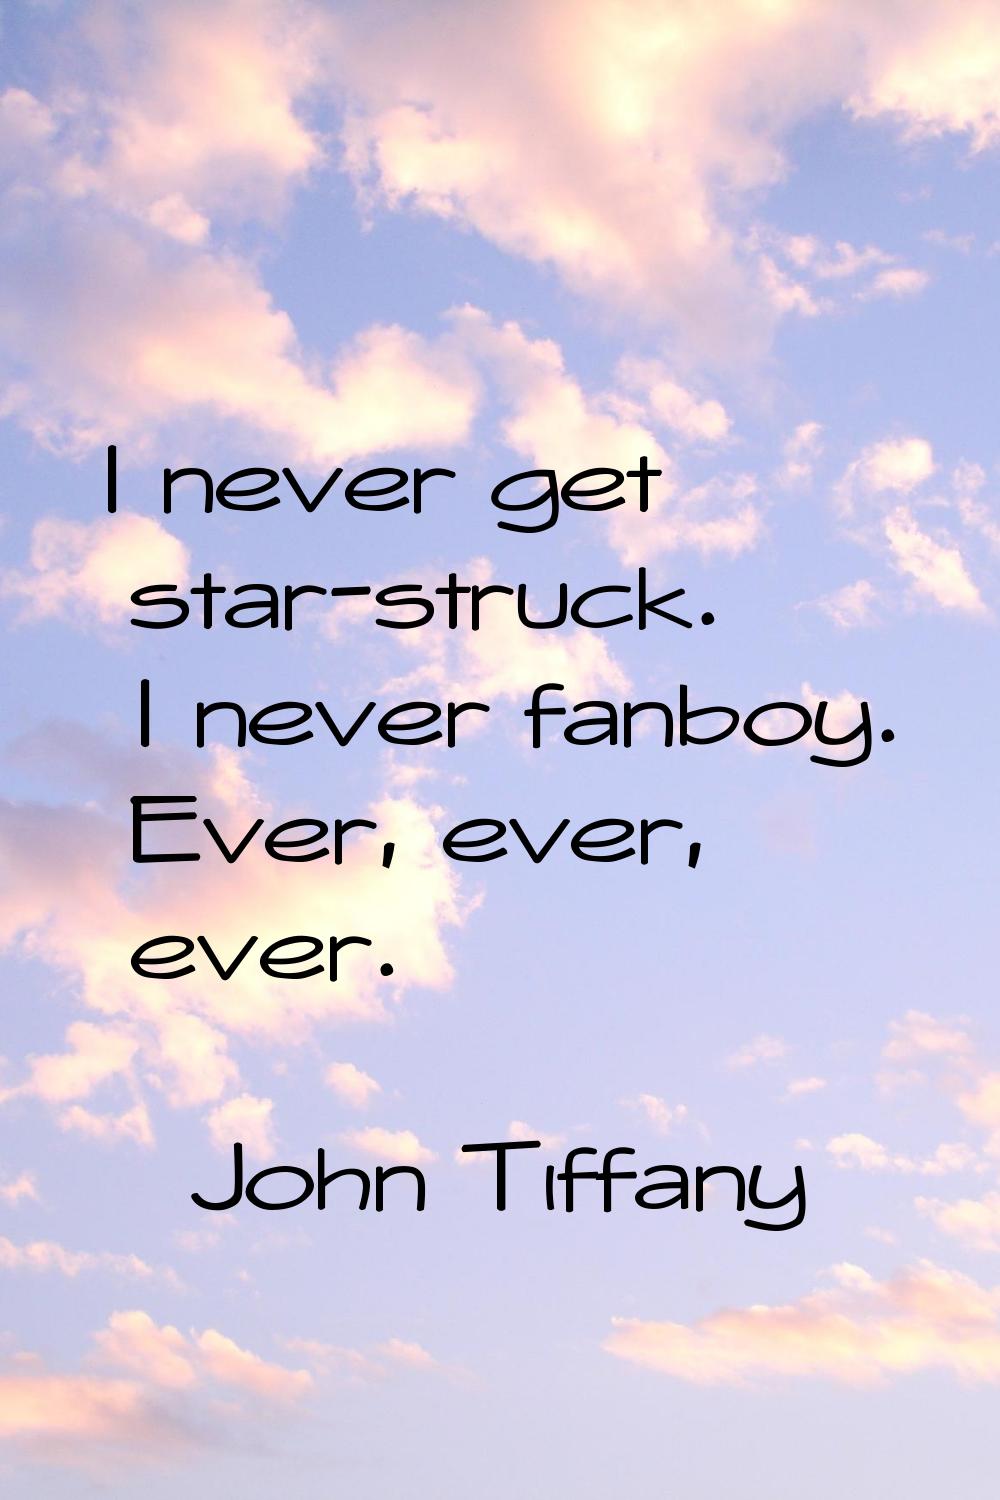 I never get star-struck. I never fanboy. Ever, ever, ever.